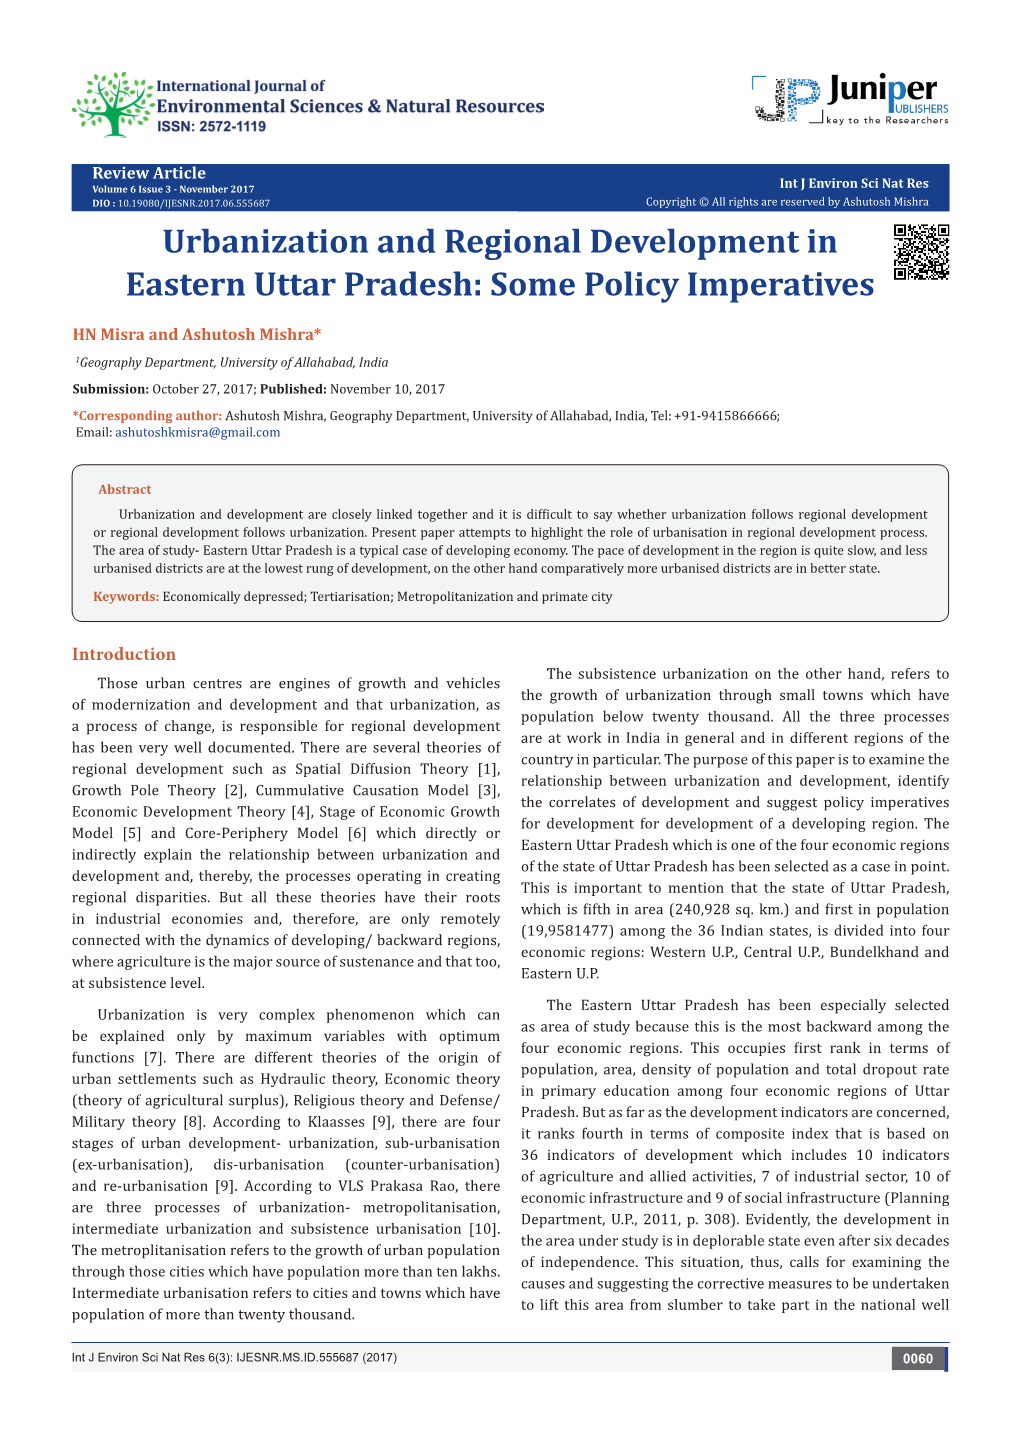 Urbanization and Regional Development in Eastern Uttar Pradesh: Some Policy Imperatives